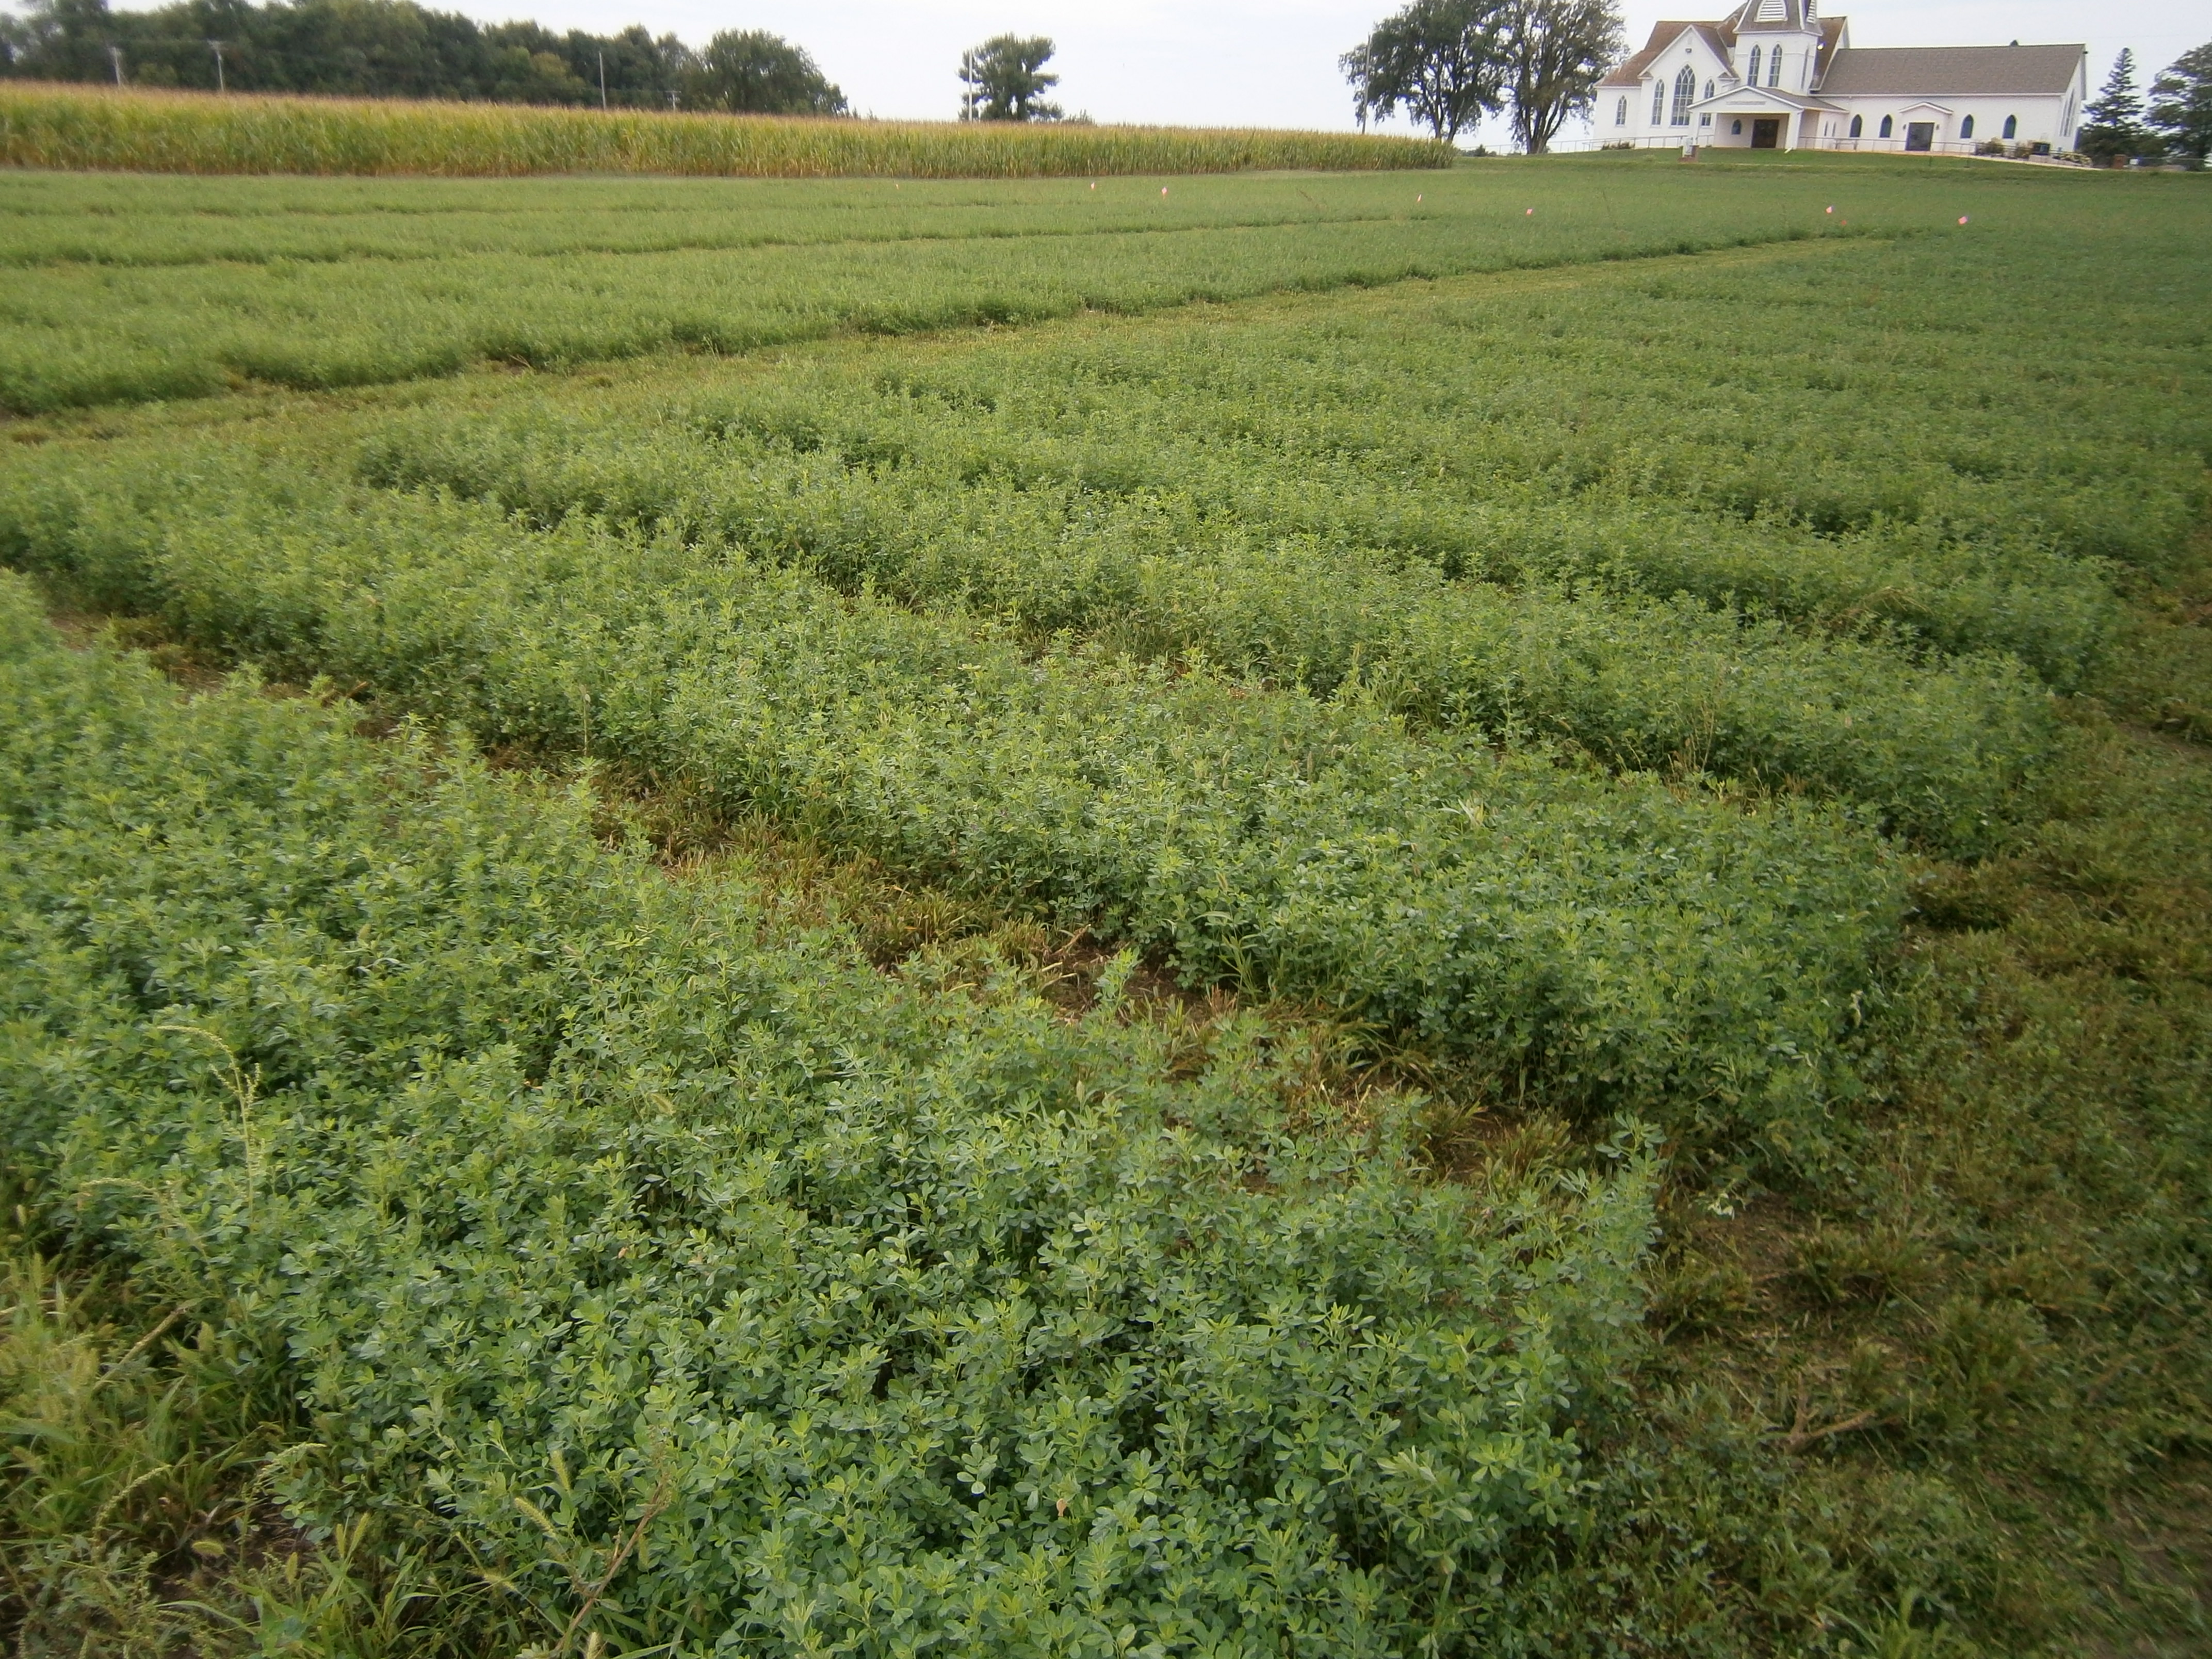 several plots of alfalfa